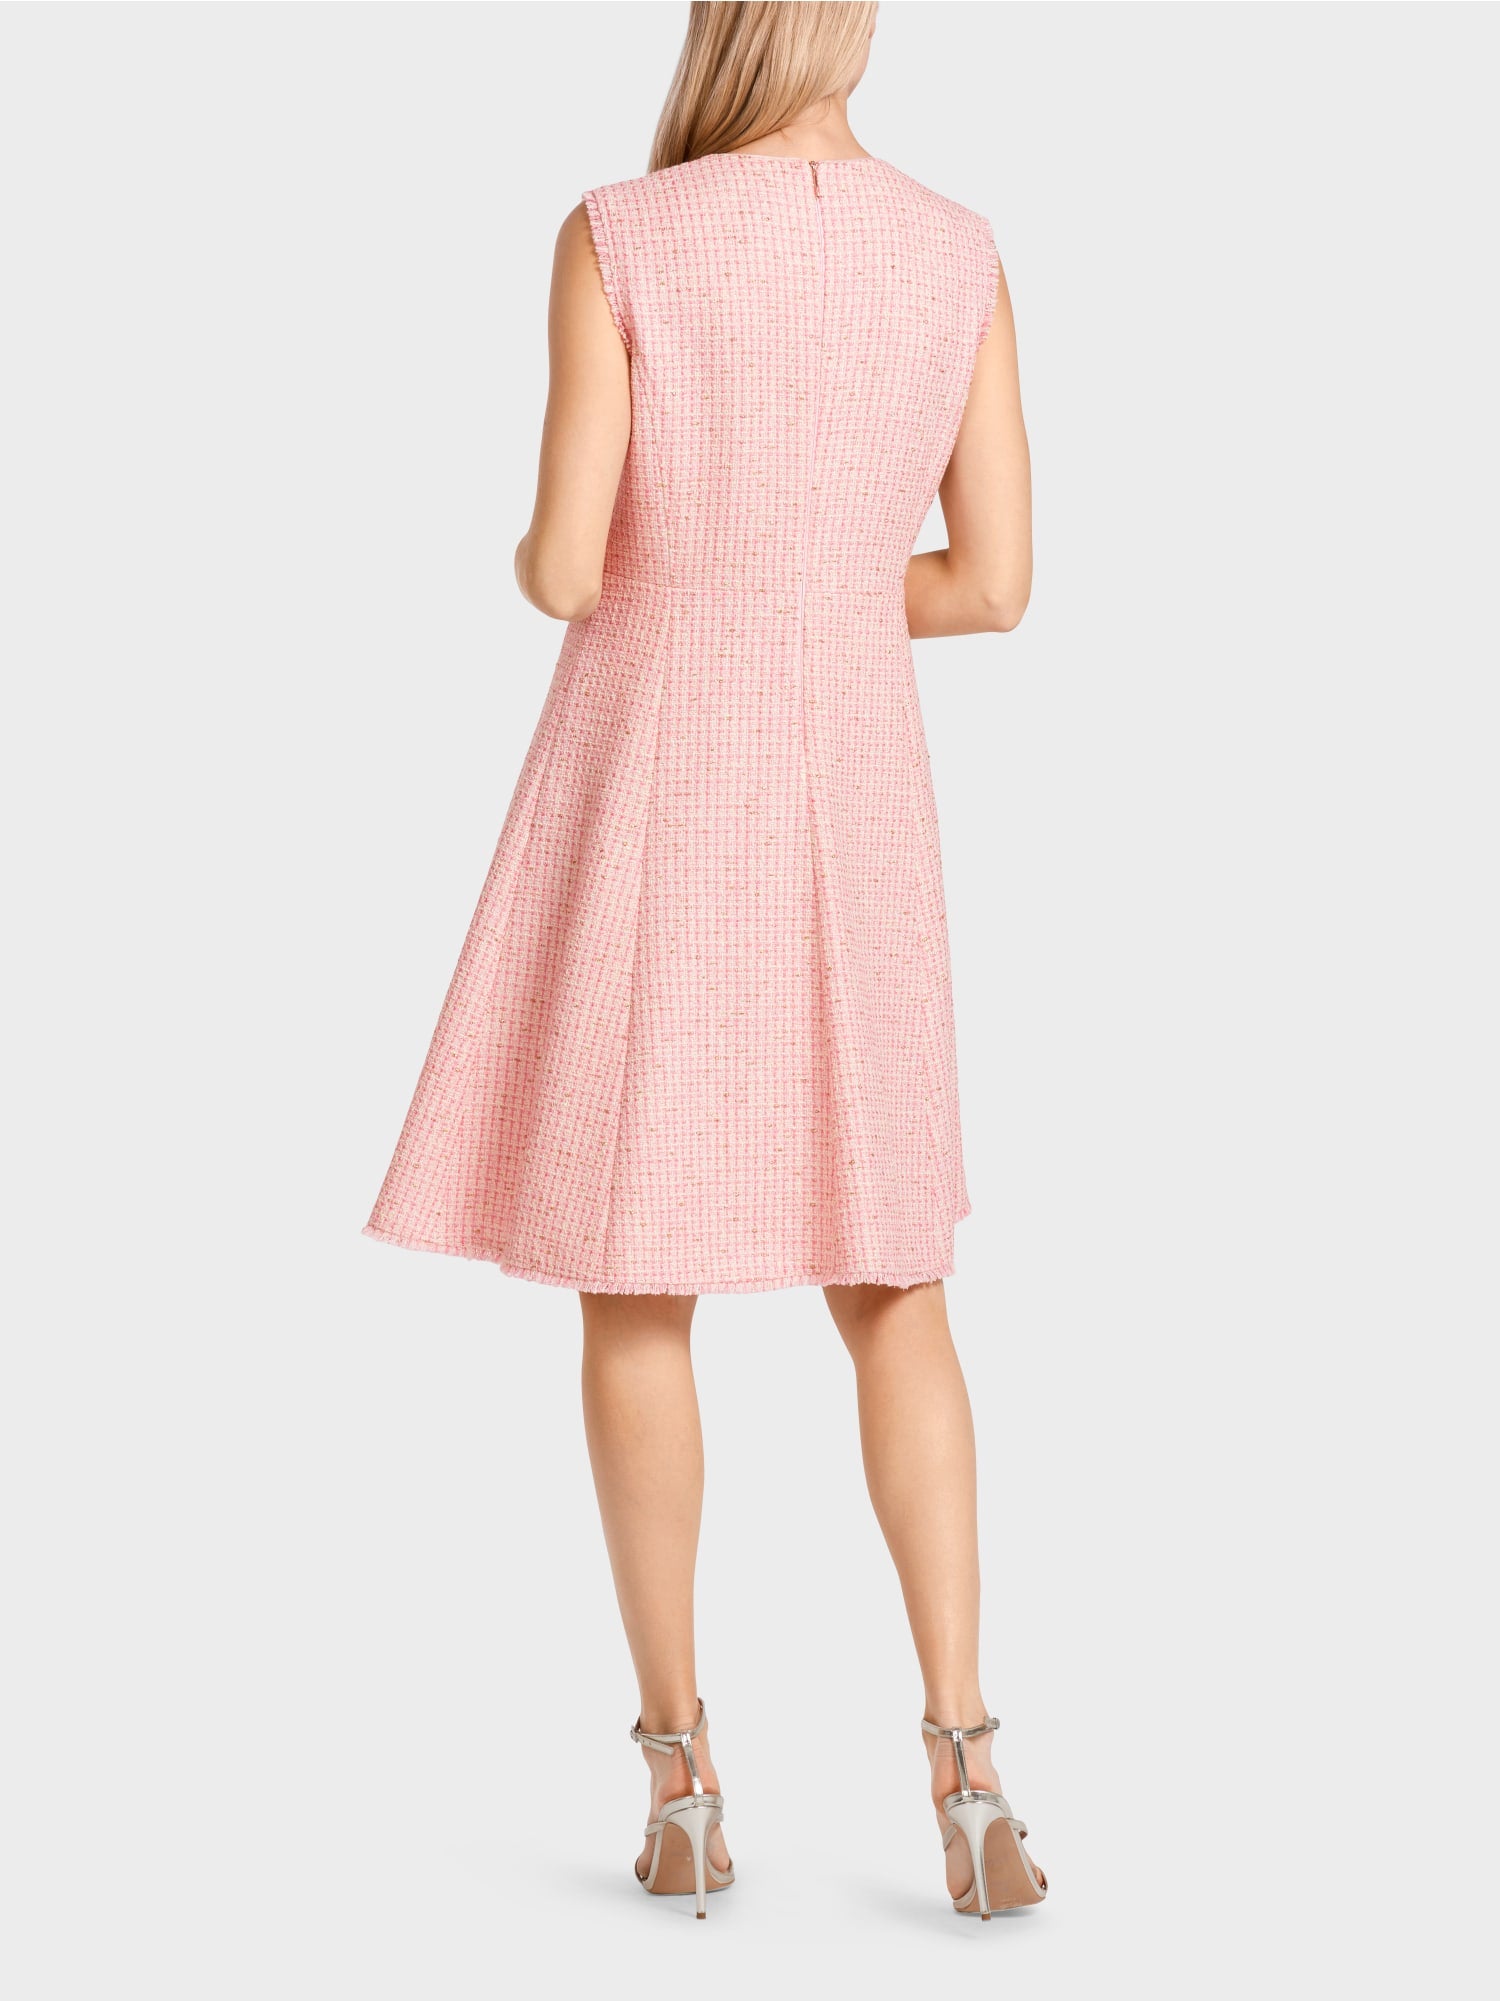 Sleeveless Dress with Panel  Skirt